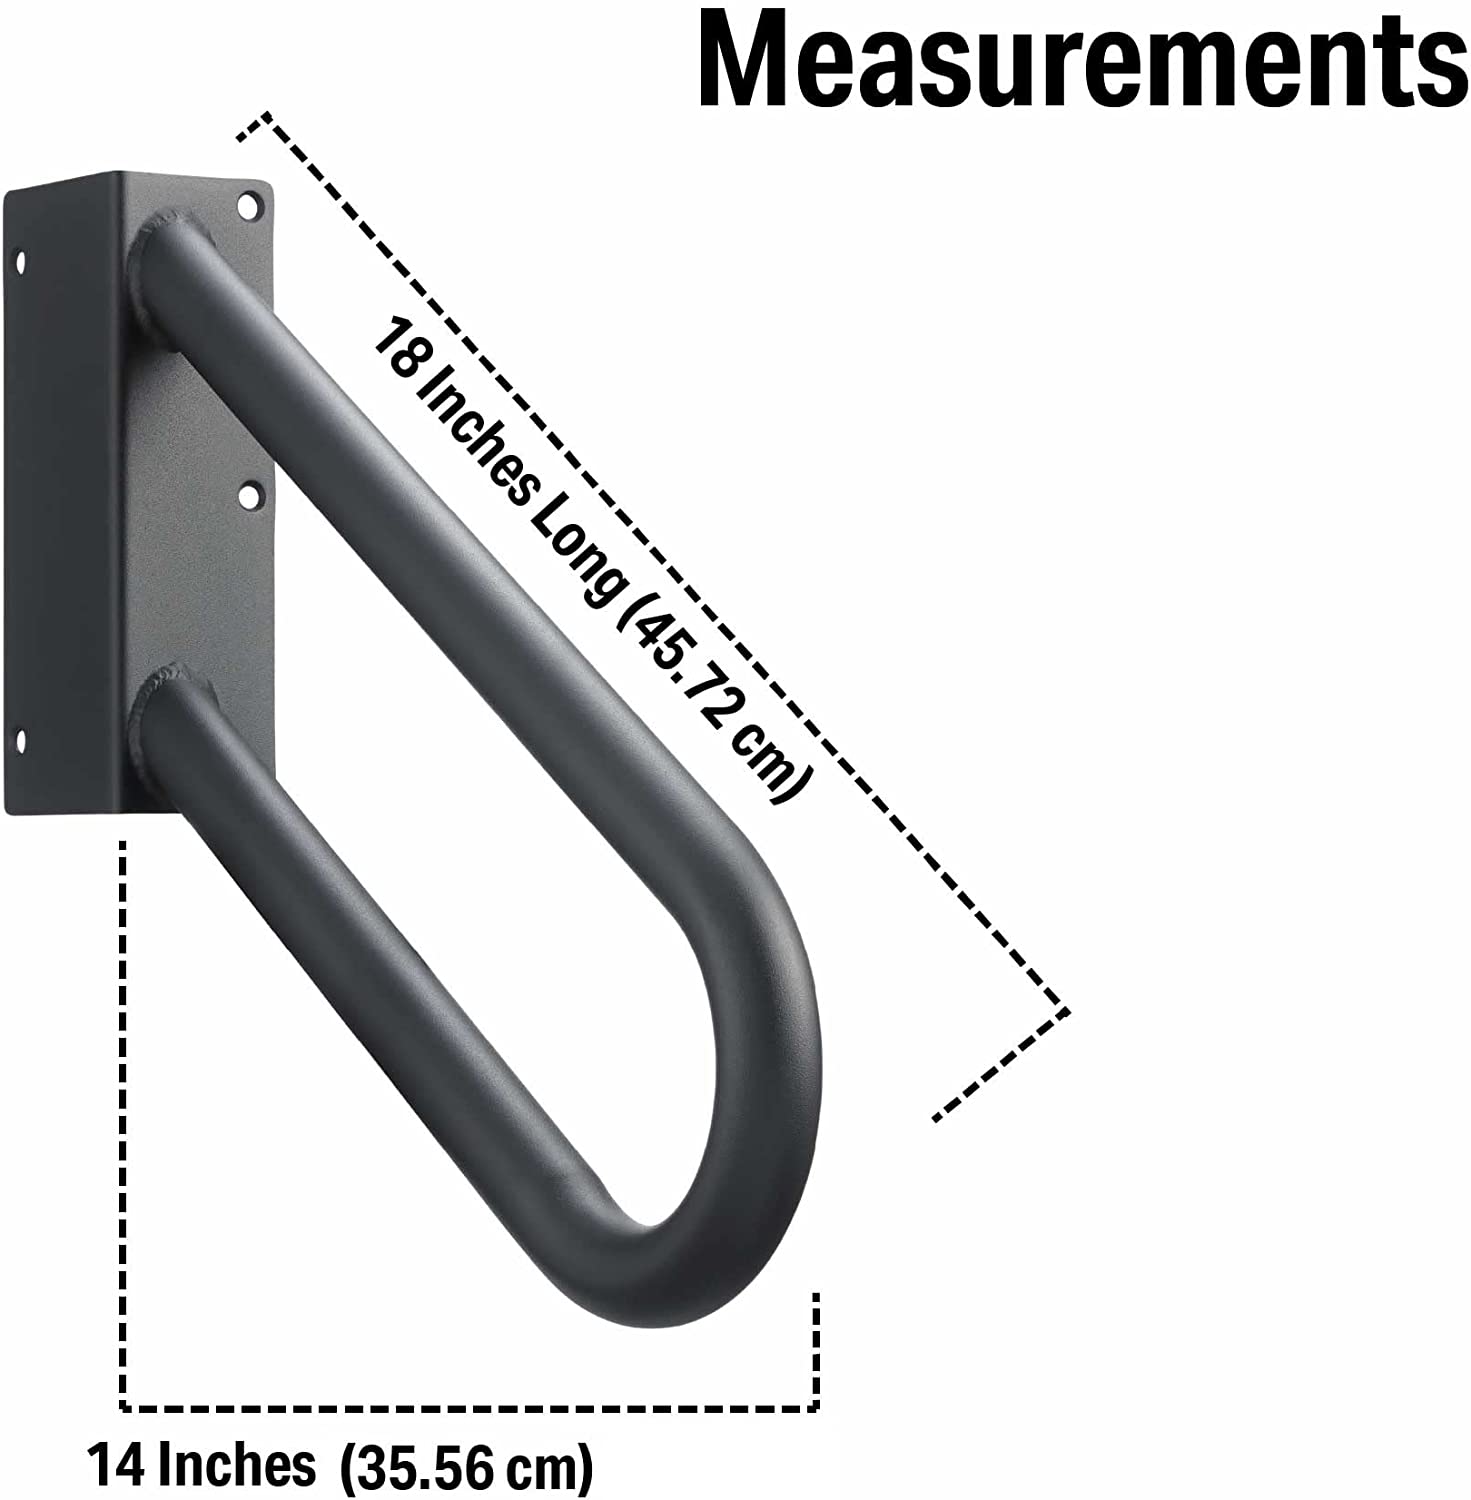 18 inch jamb mount handrail dimensions diagram